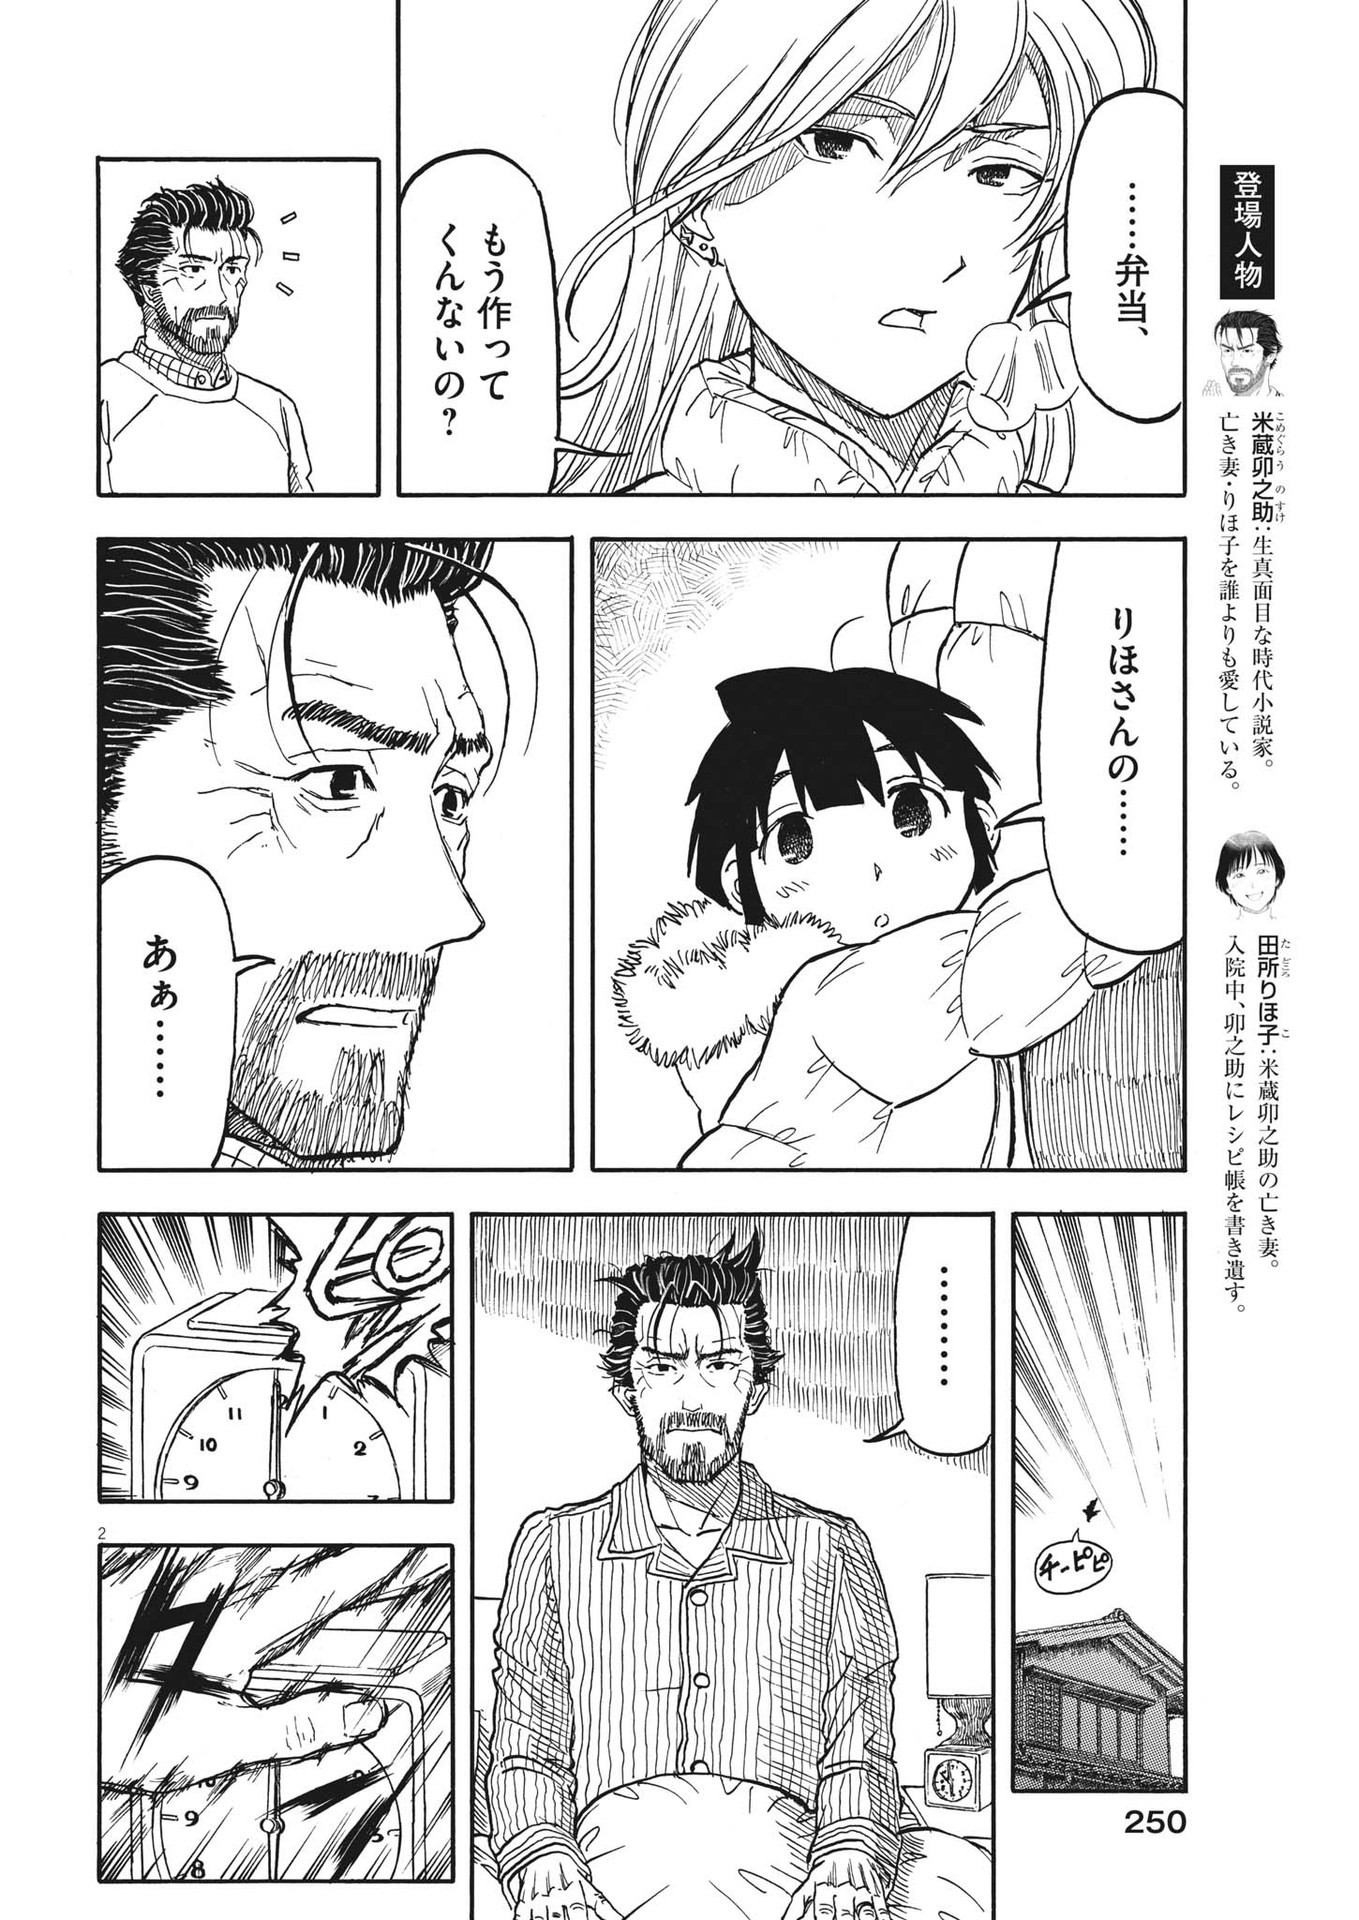 Komegura Fuufu no Recipe-chou - Chapter 33 - Page 2